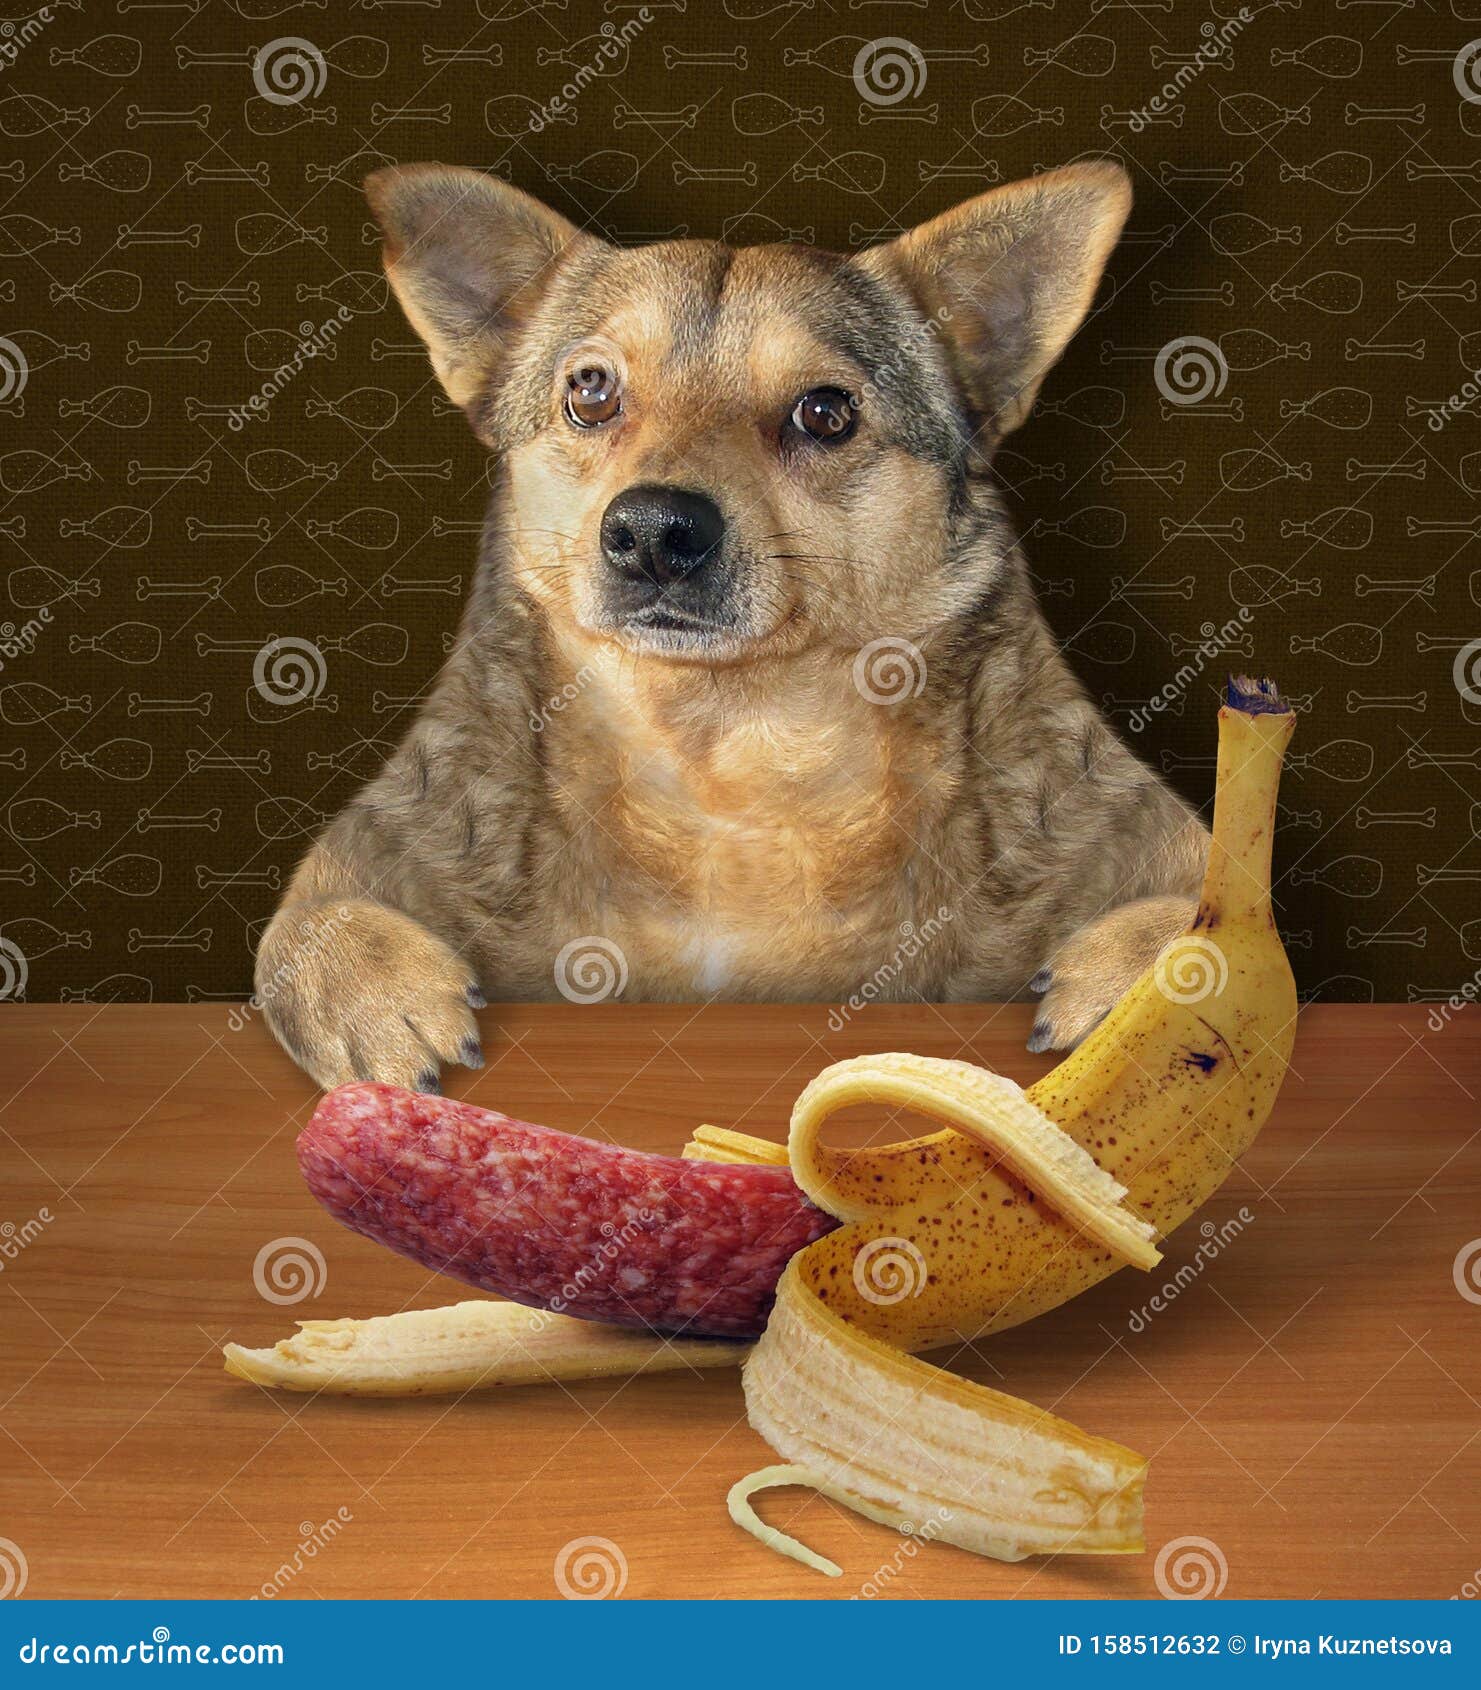 will a banana peel hurt a dog